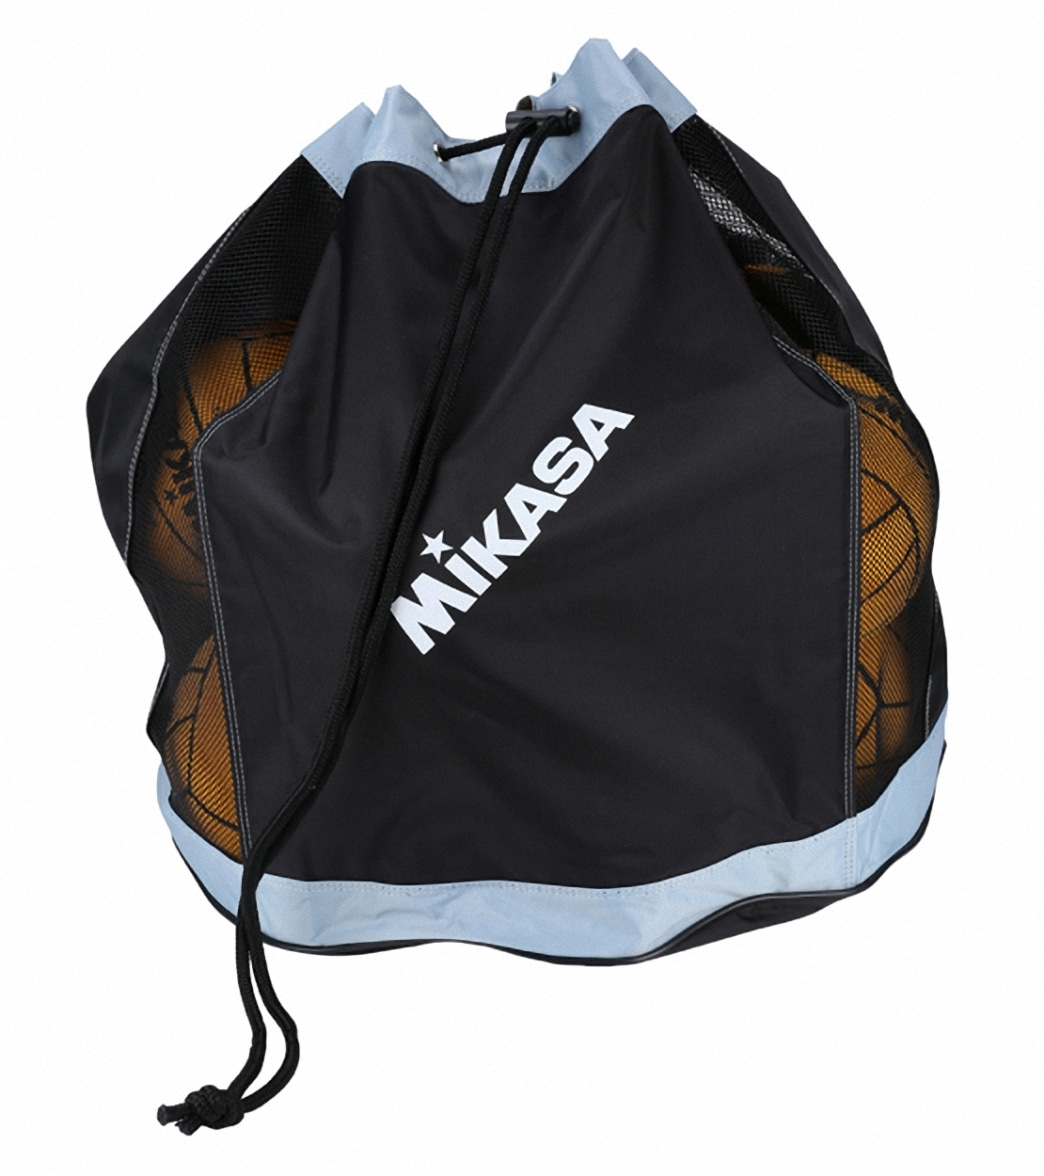 Mikasa Tough Sac Duffel Bag - Swimoutlet.com